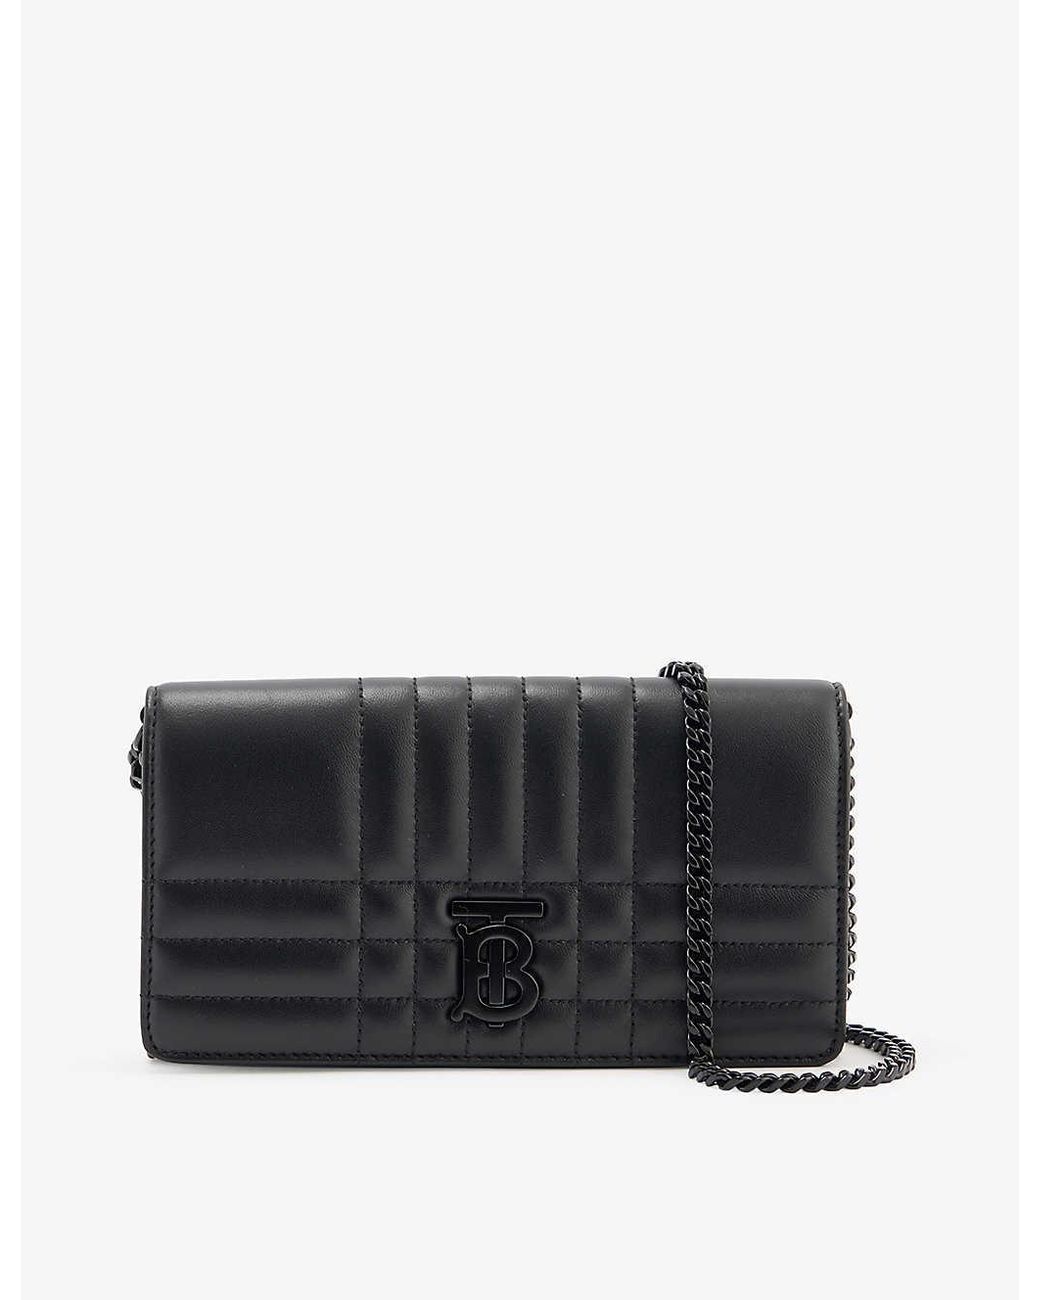 Burberry Black Lola Chain Wallet Bag - ShopStyle